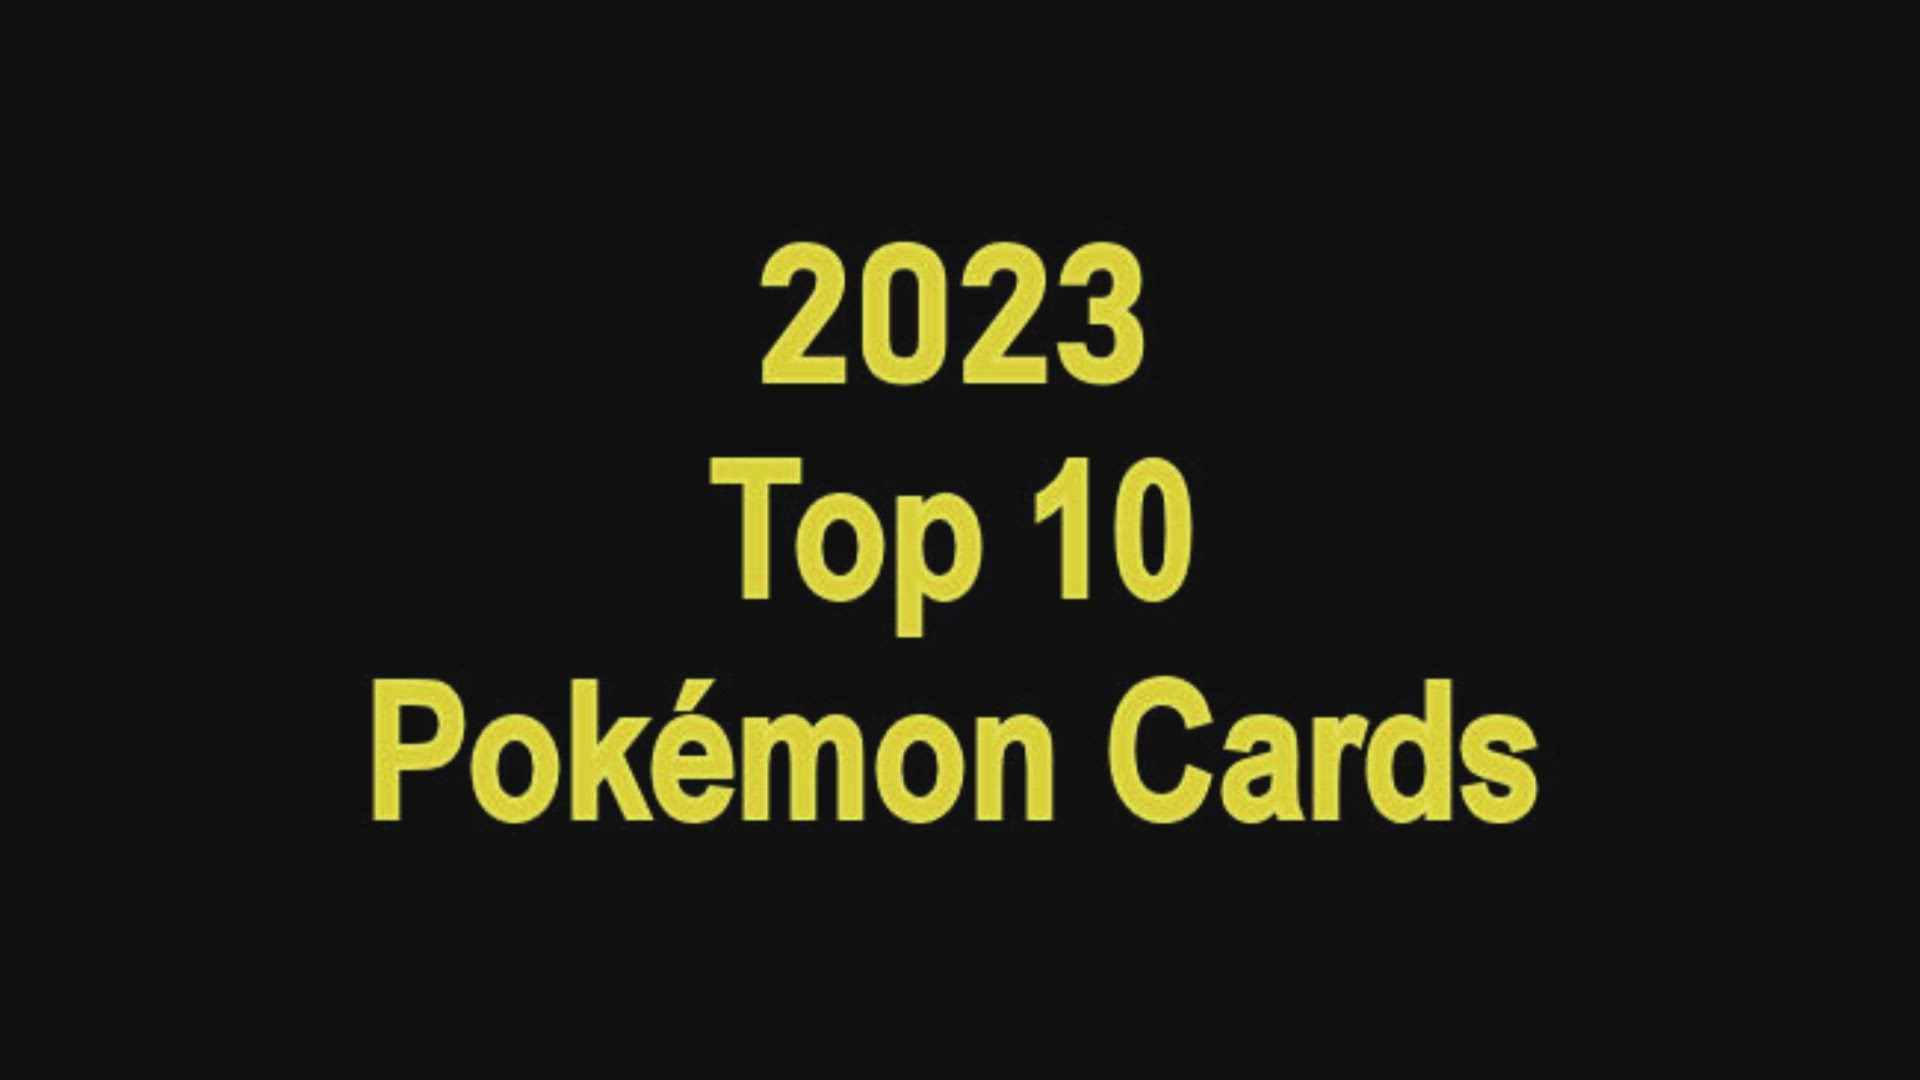 Main Pokémon of top 100 players in Pokémon UNITE — Feb. 13 update